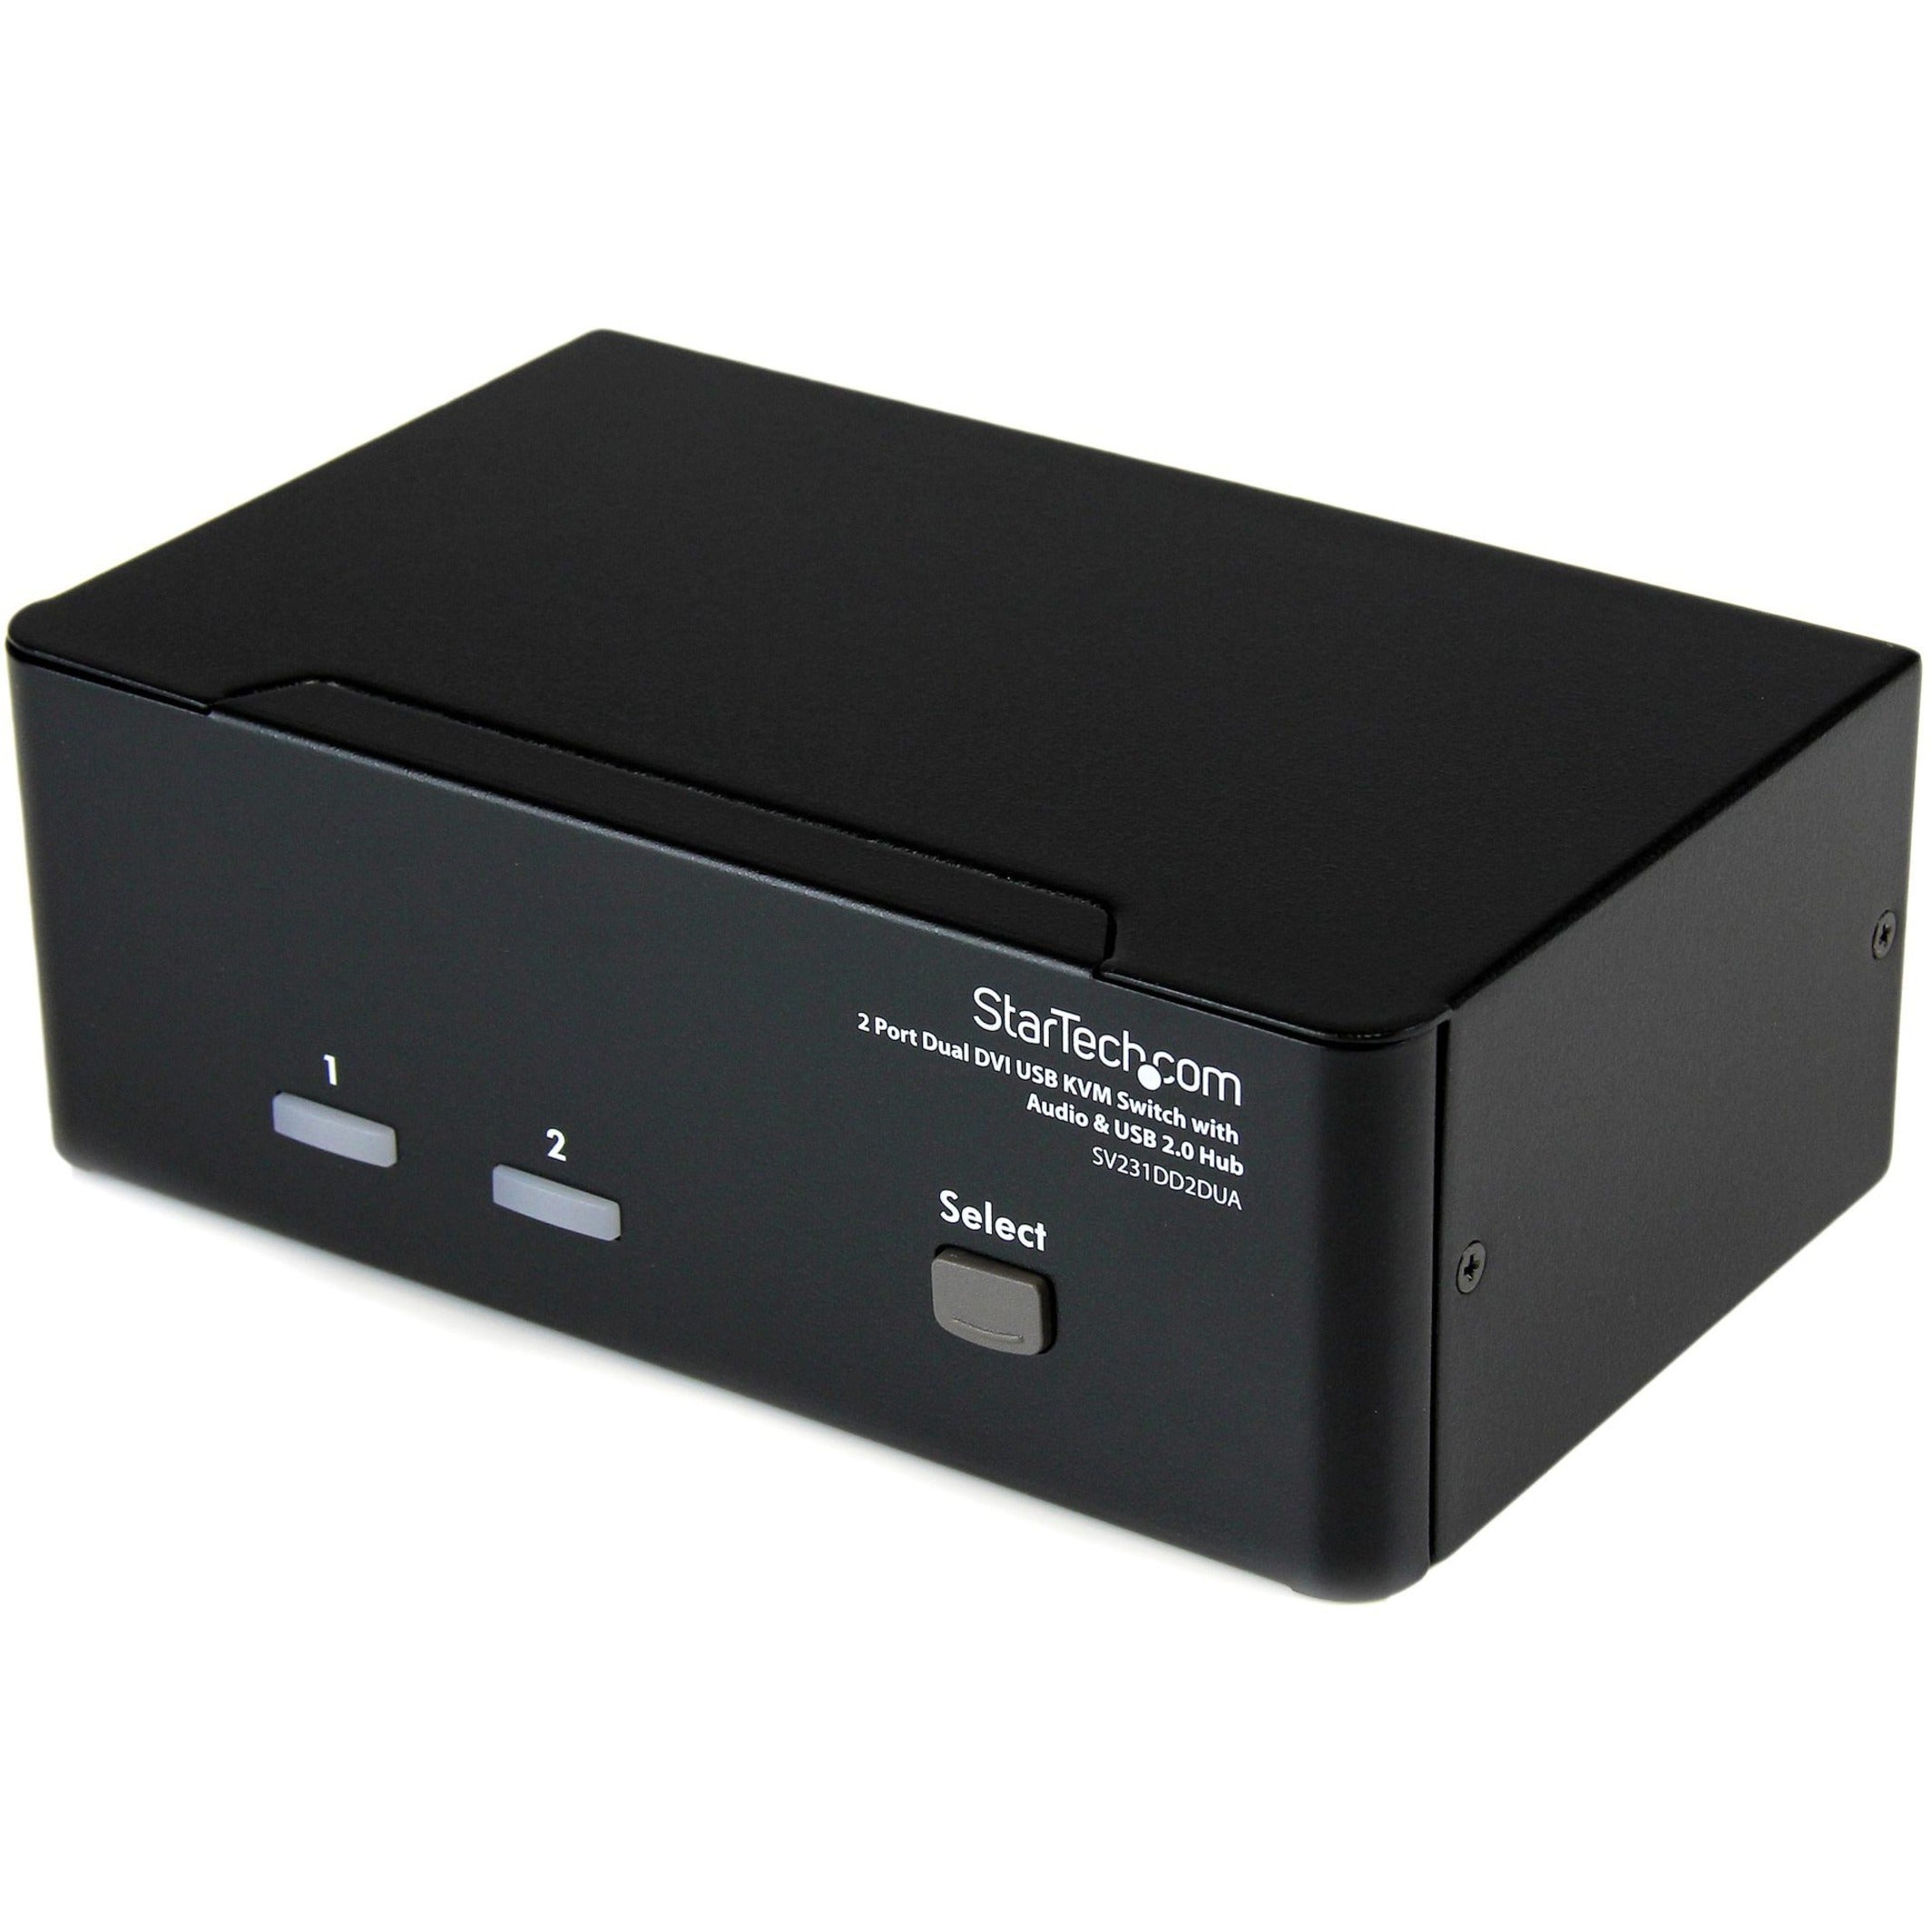 StarTech.com SV231DD2DUA 2 Port Dual DVI USB KVM Switch with Audio & USB Hub, Full Multimedia Control, Dual Monitor Support